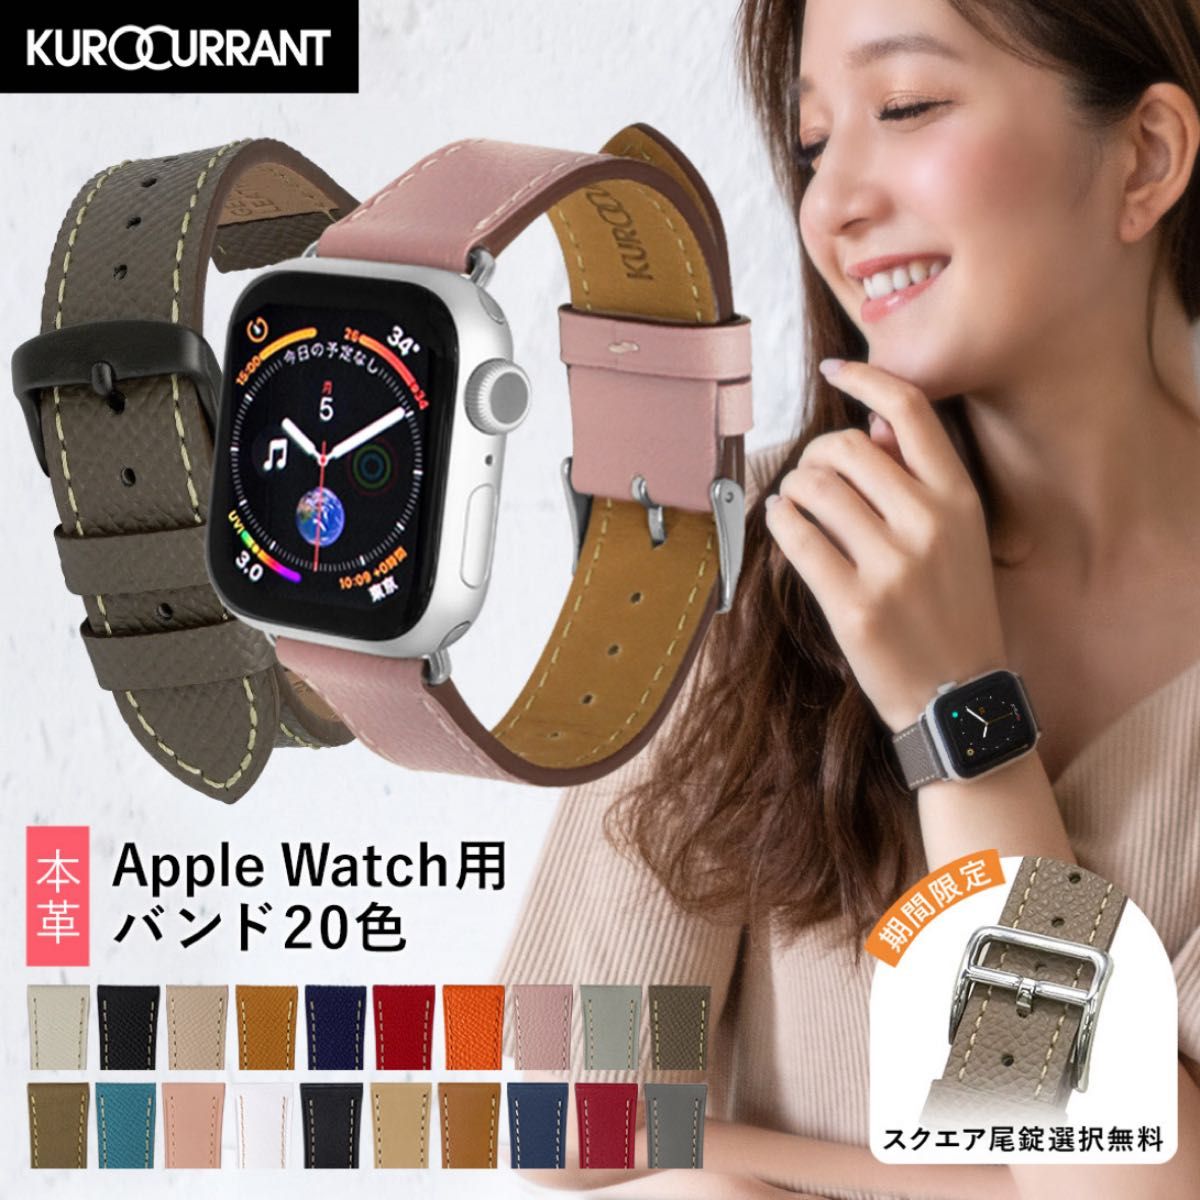 Apple Watch アップルウォッチ 革ベルト 腕時計 iPhone レザーバンド レザーベルトレザーストラップ ベルト